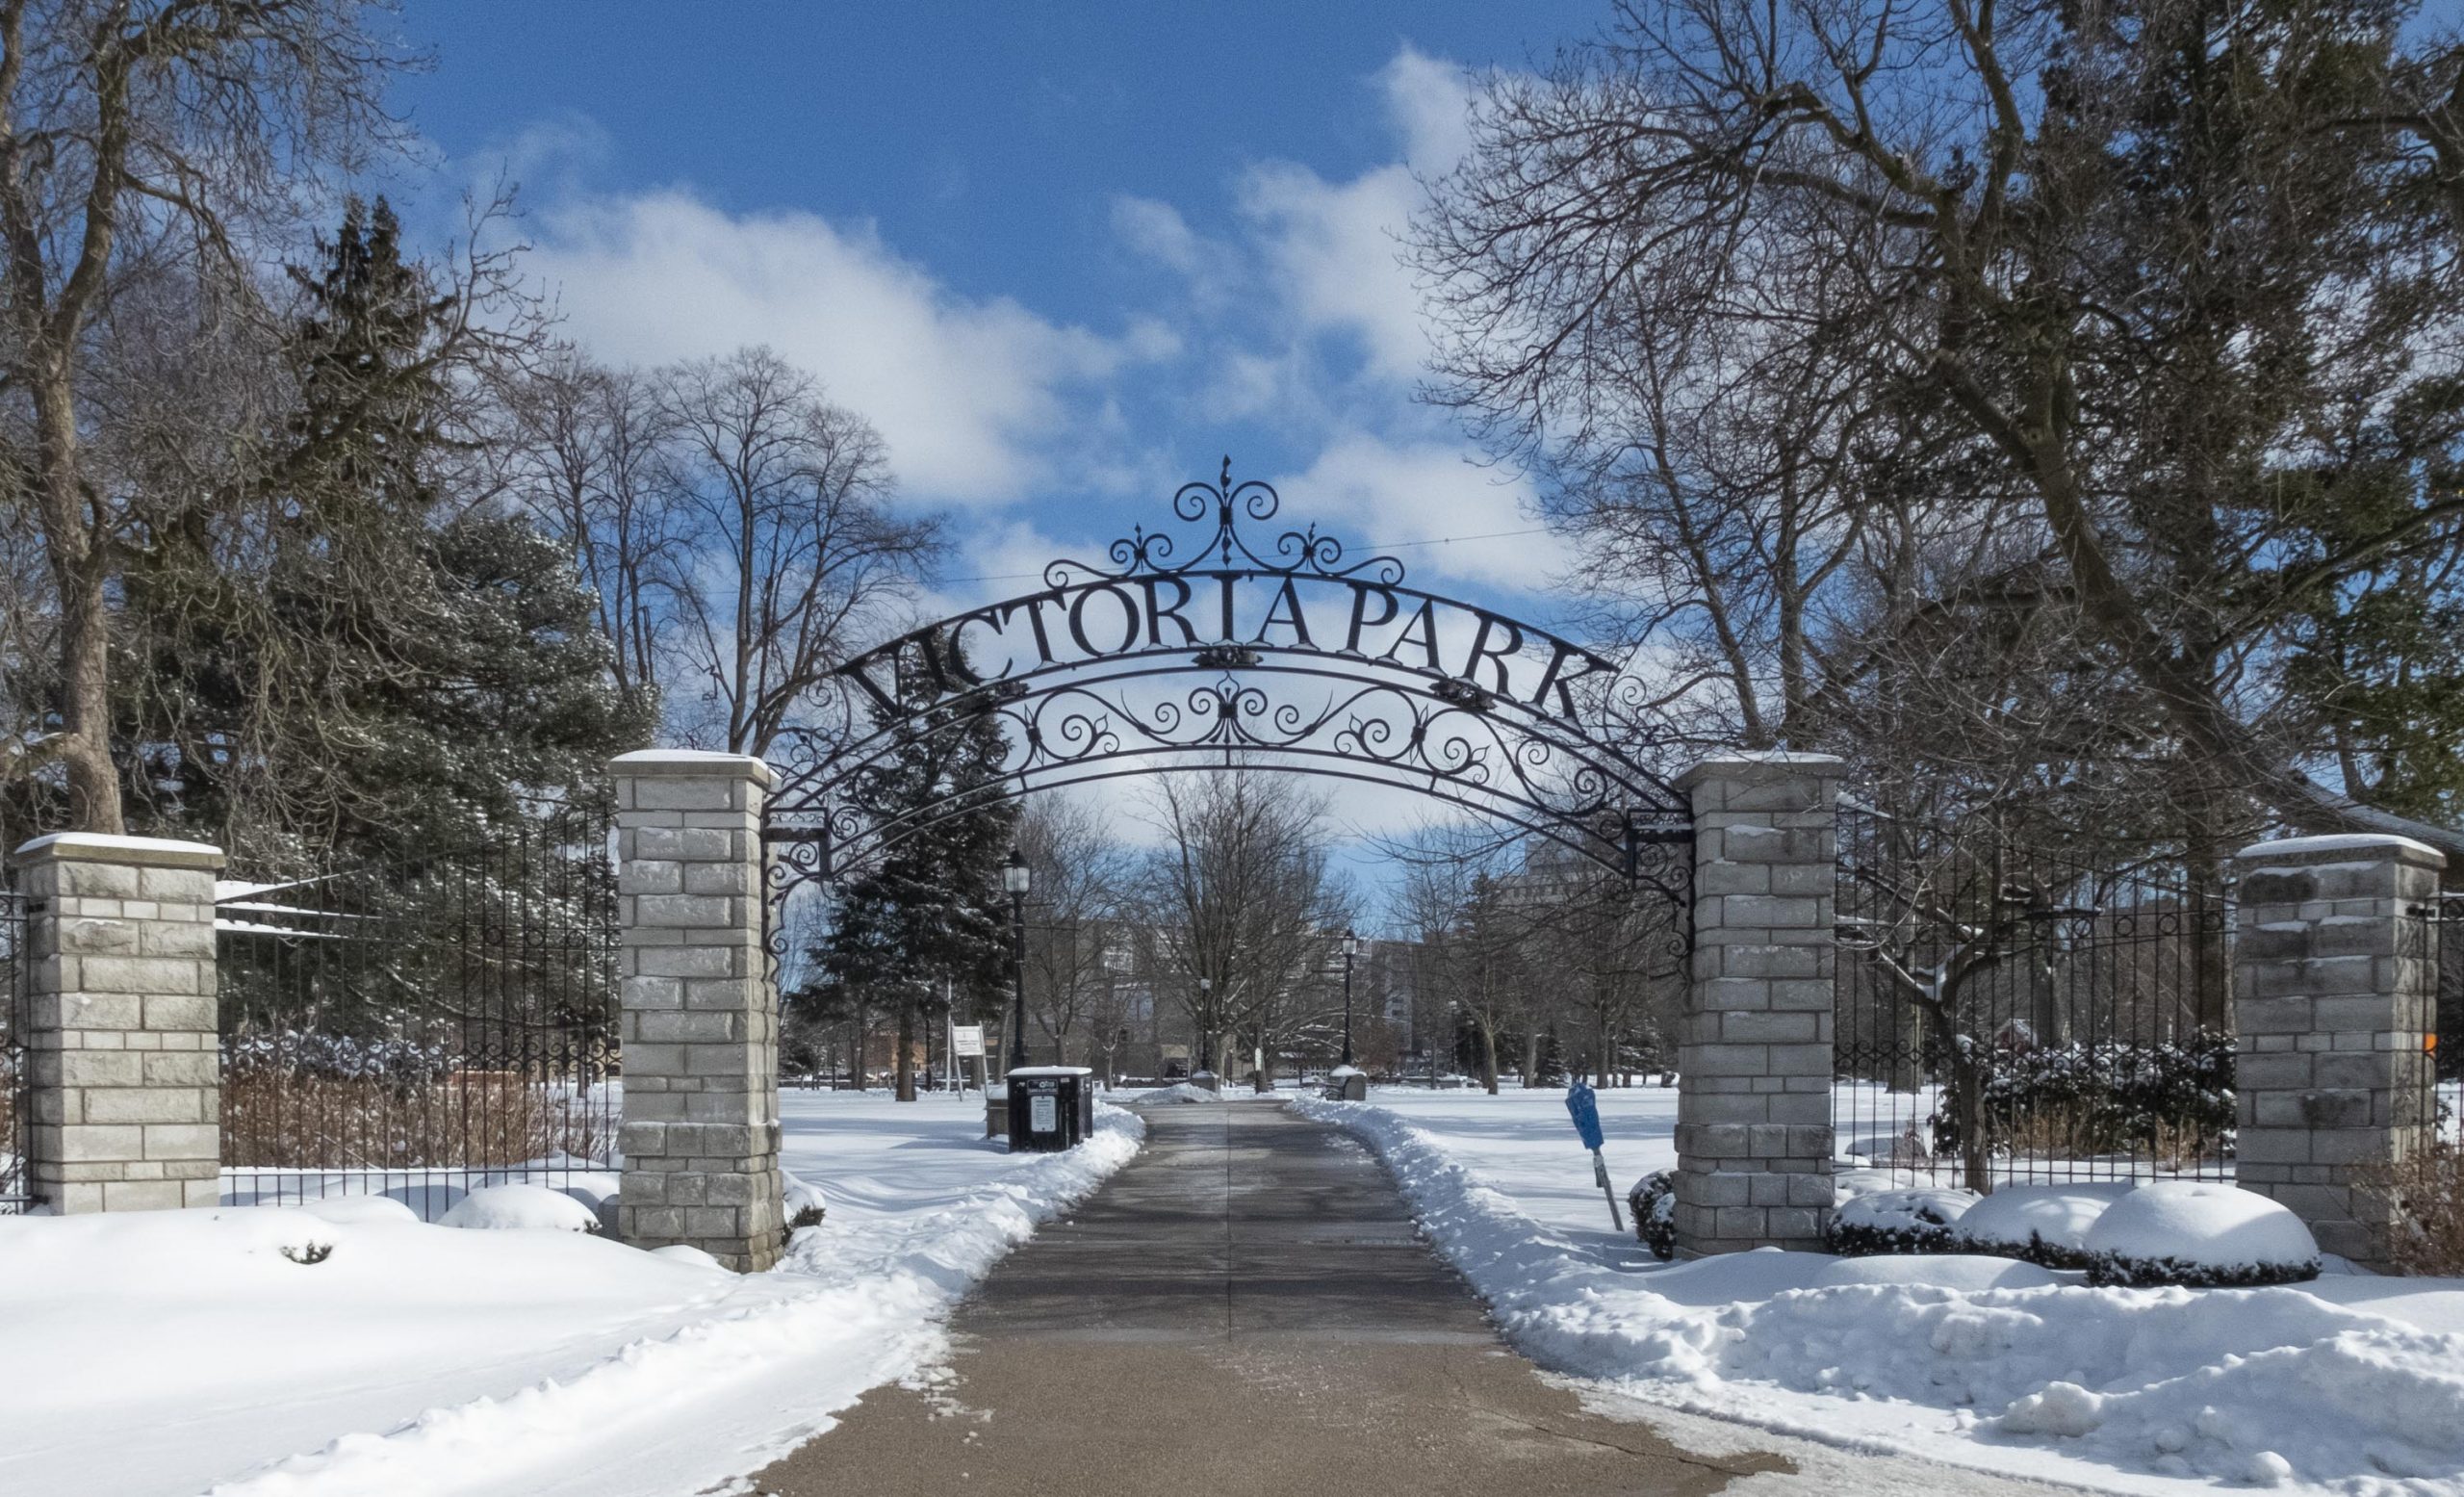 Entrance to Victoria Park, London Ontario